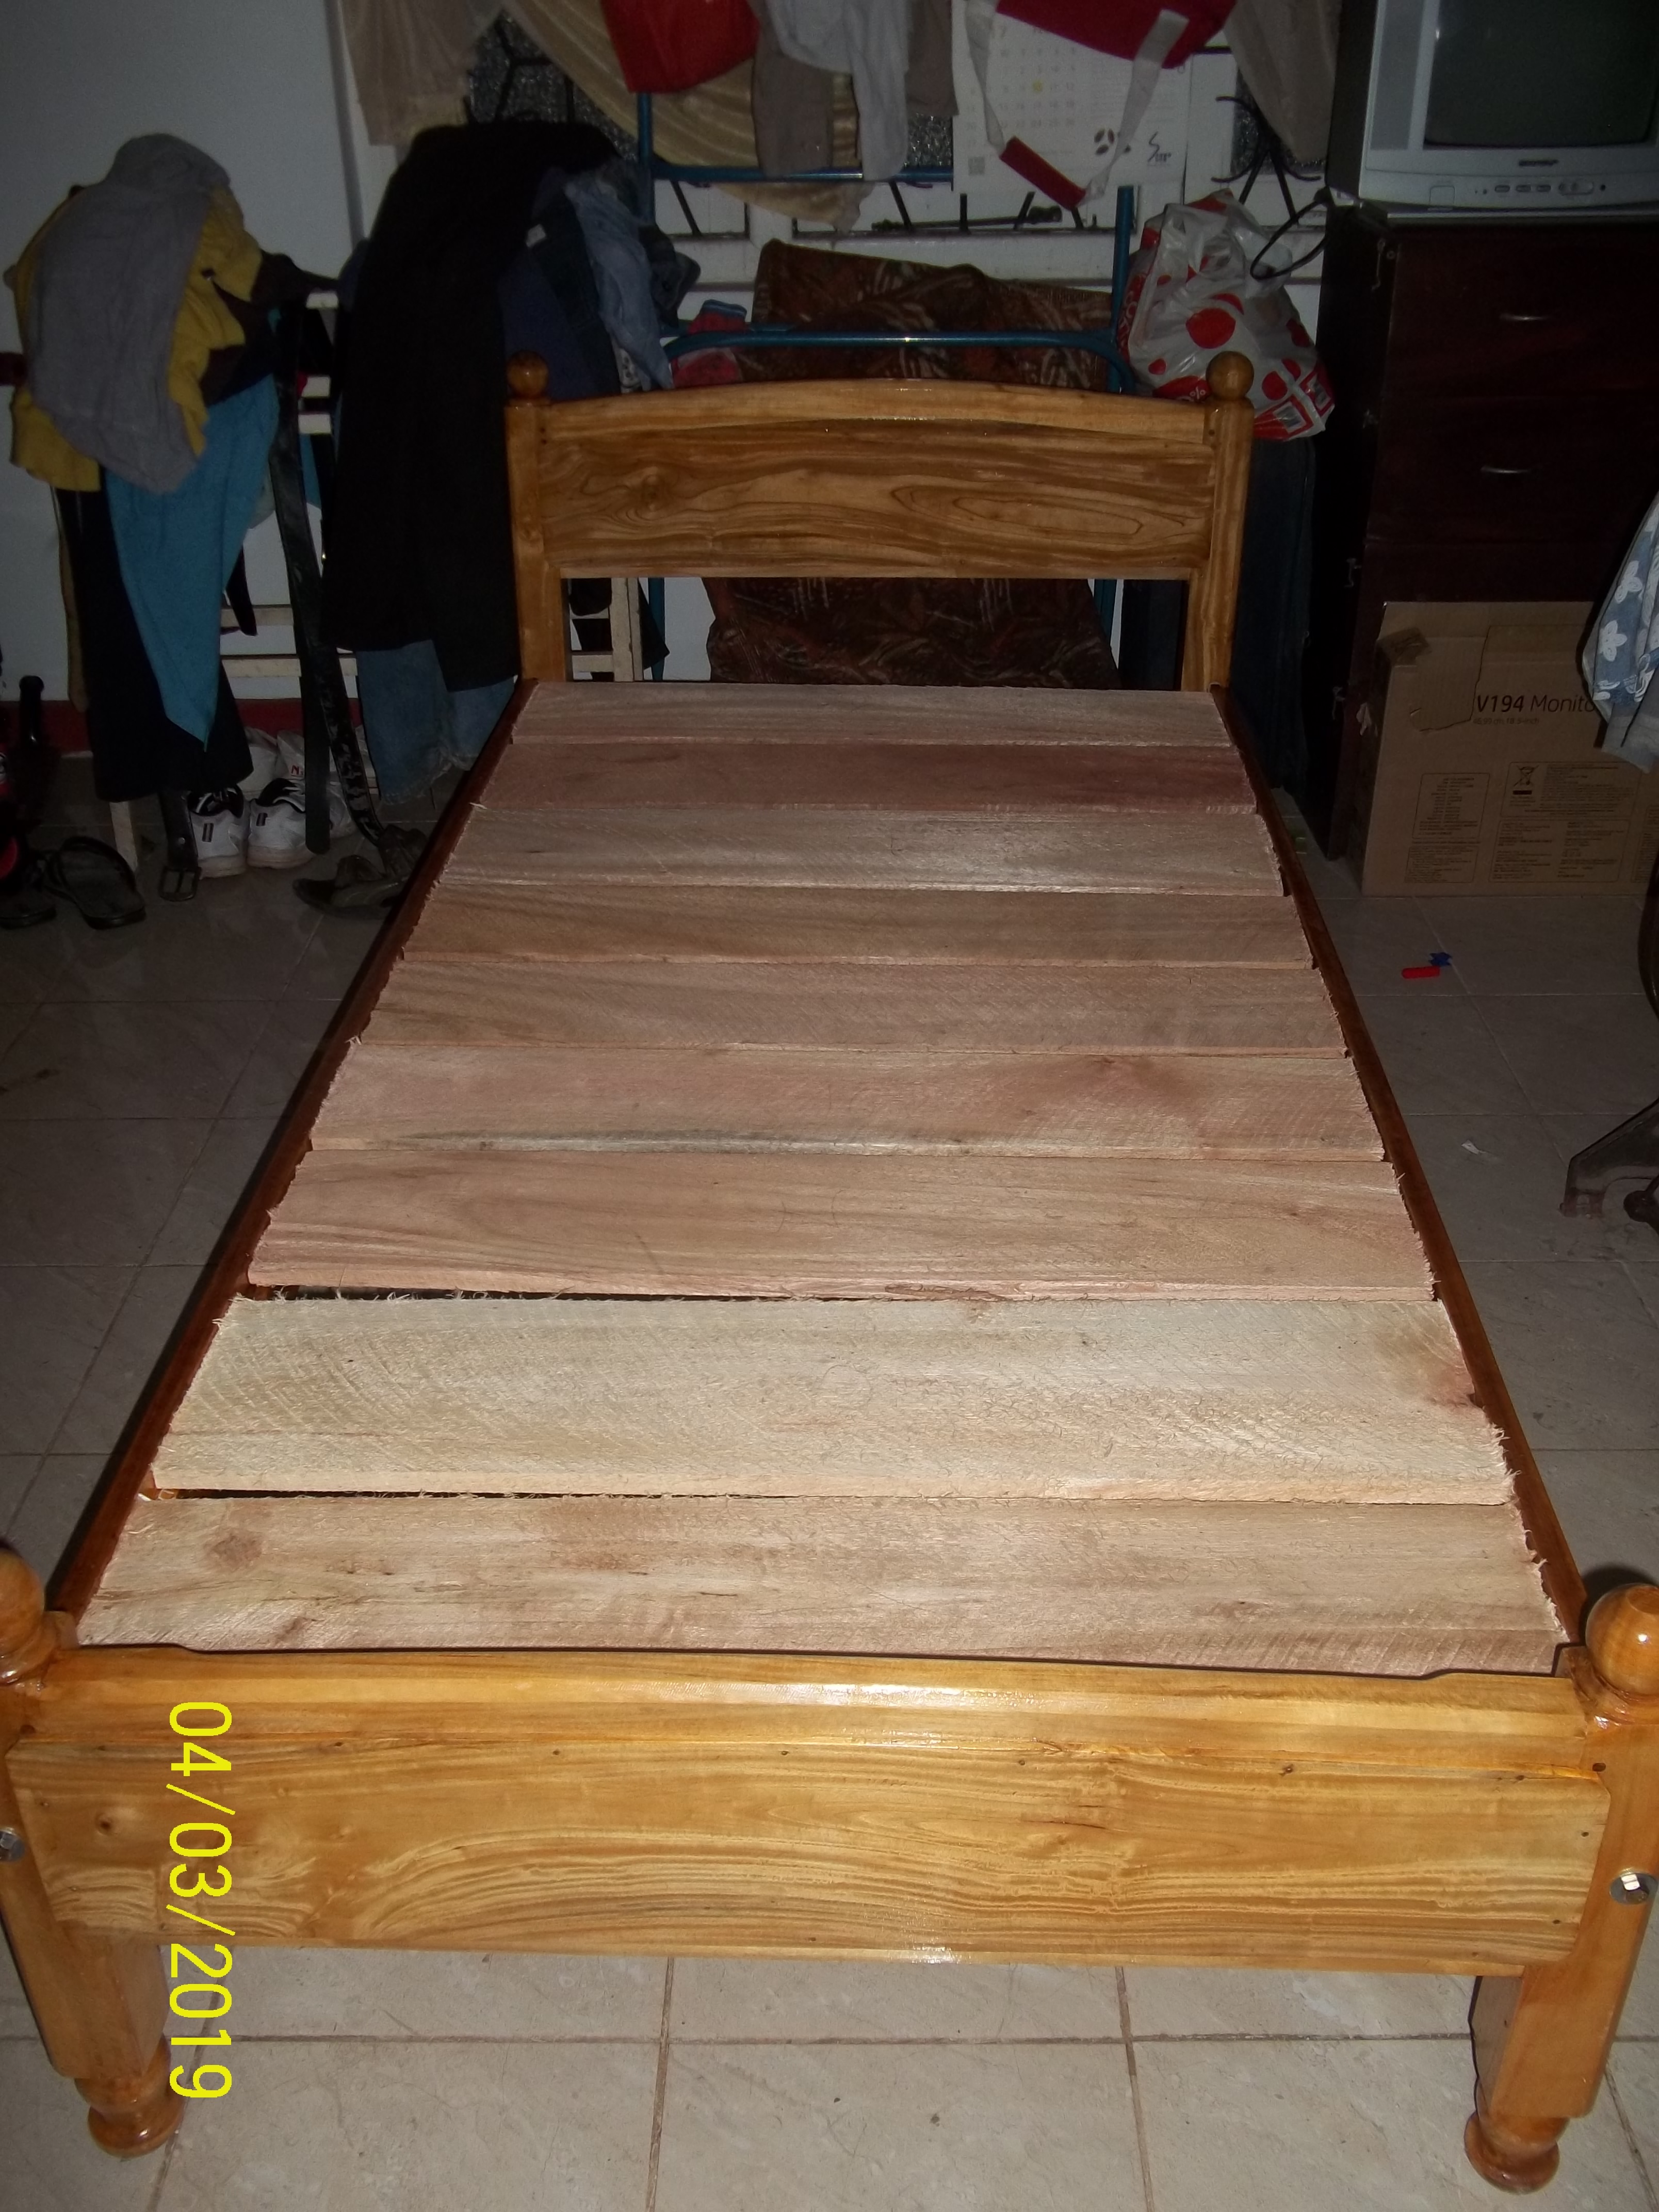 Burutha wood Medium Size (6ft by 5ft) bed